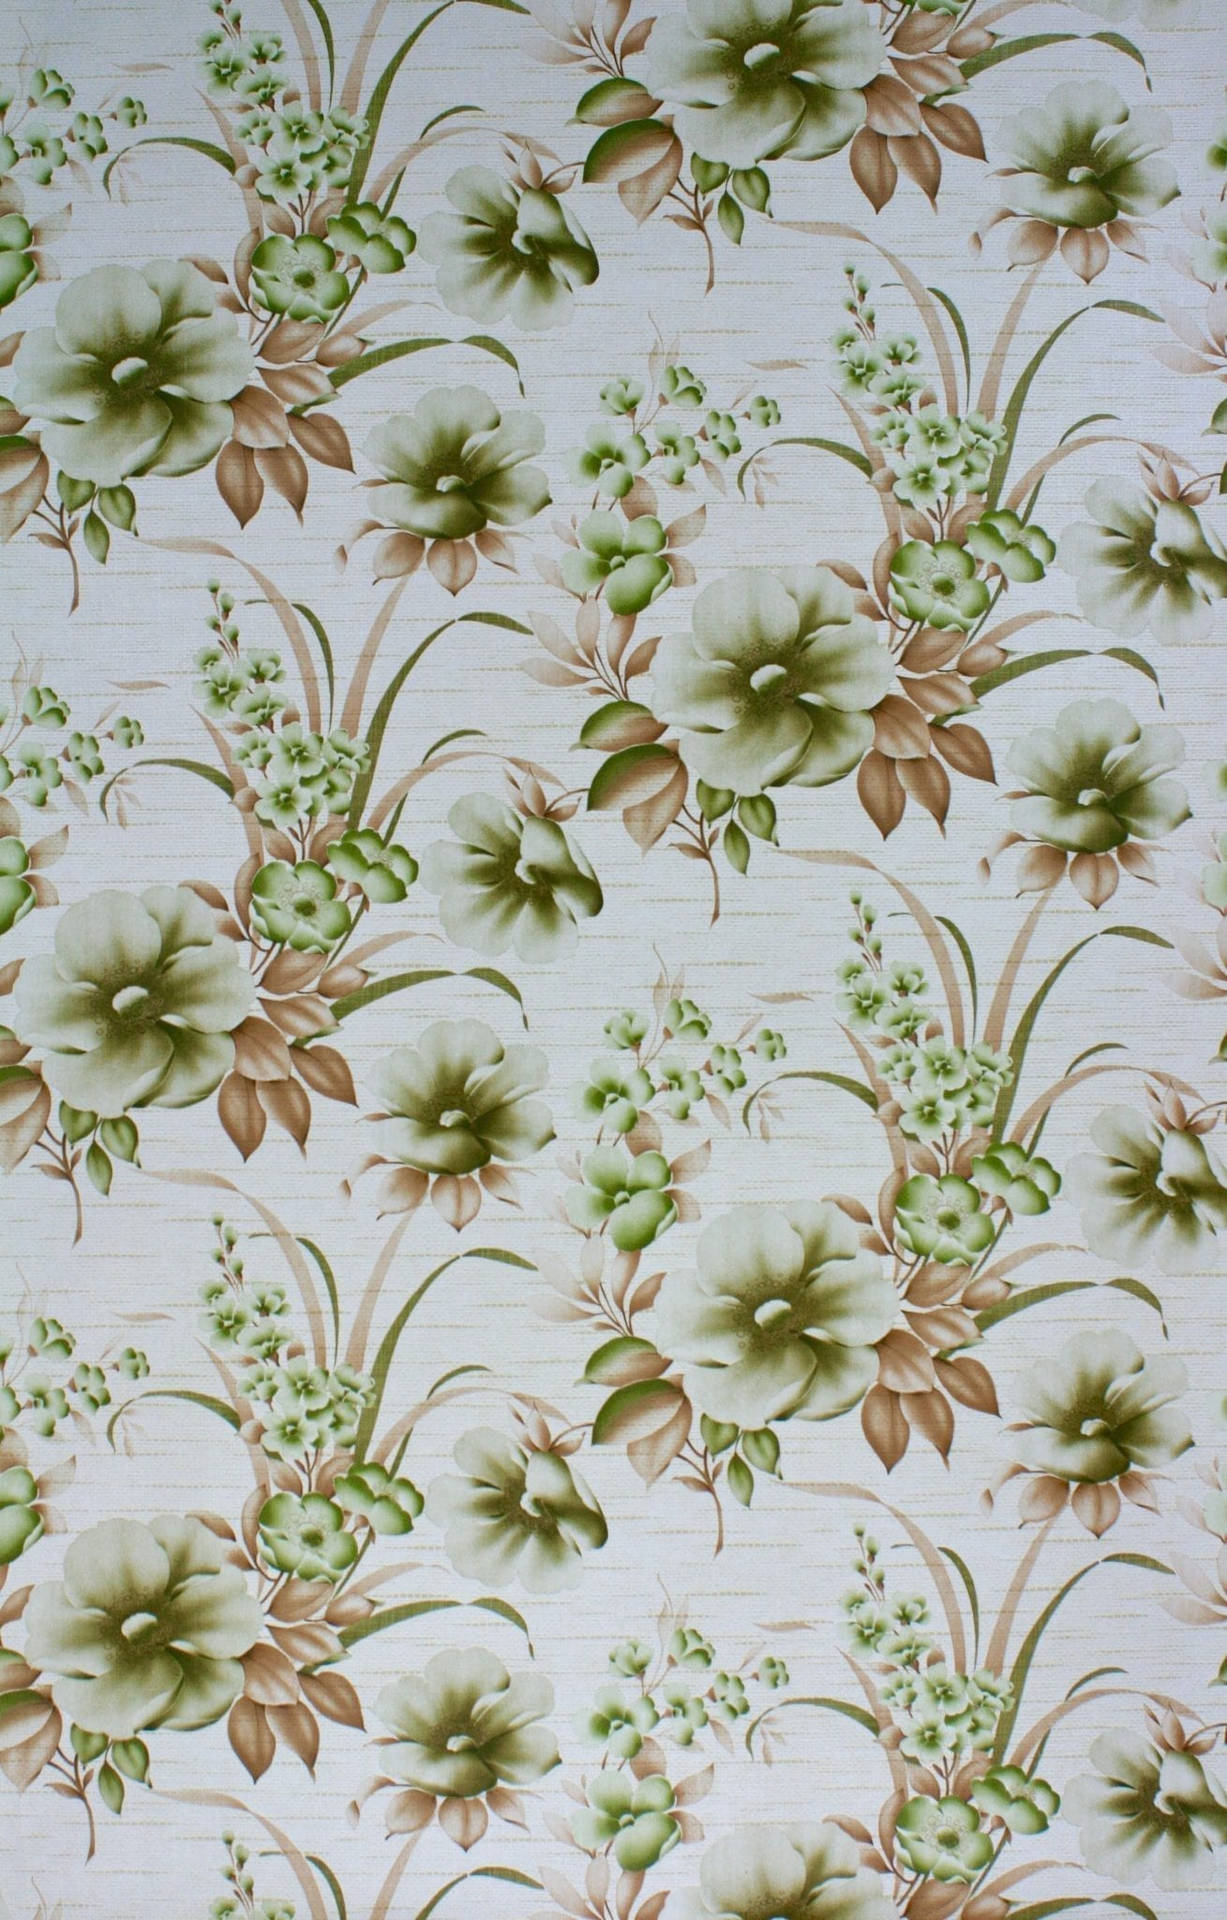 297526204  Ada Green Floral Wallpaper  by AStreet Prints